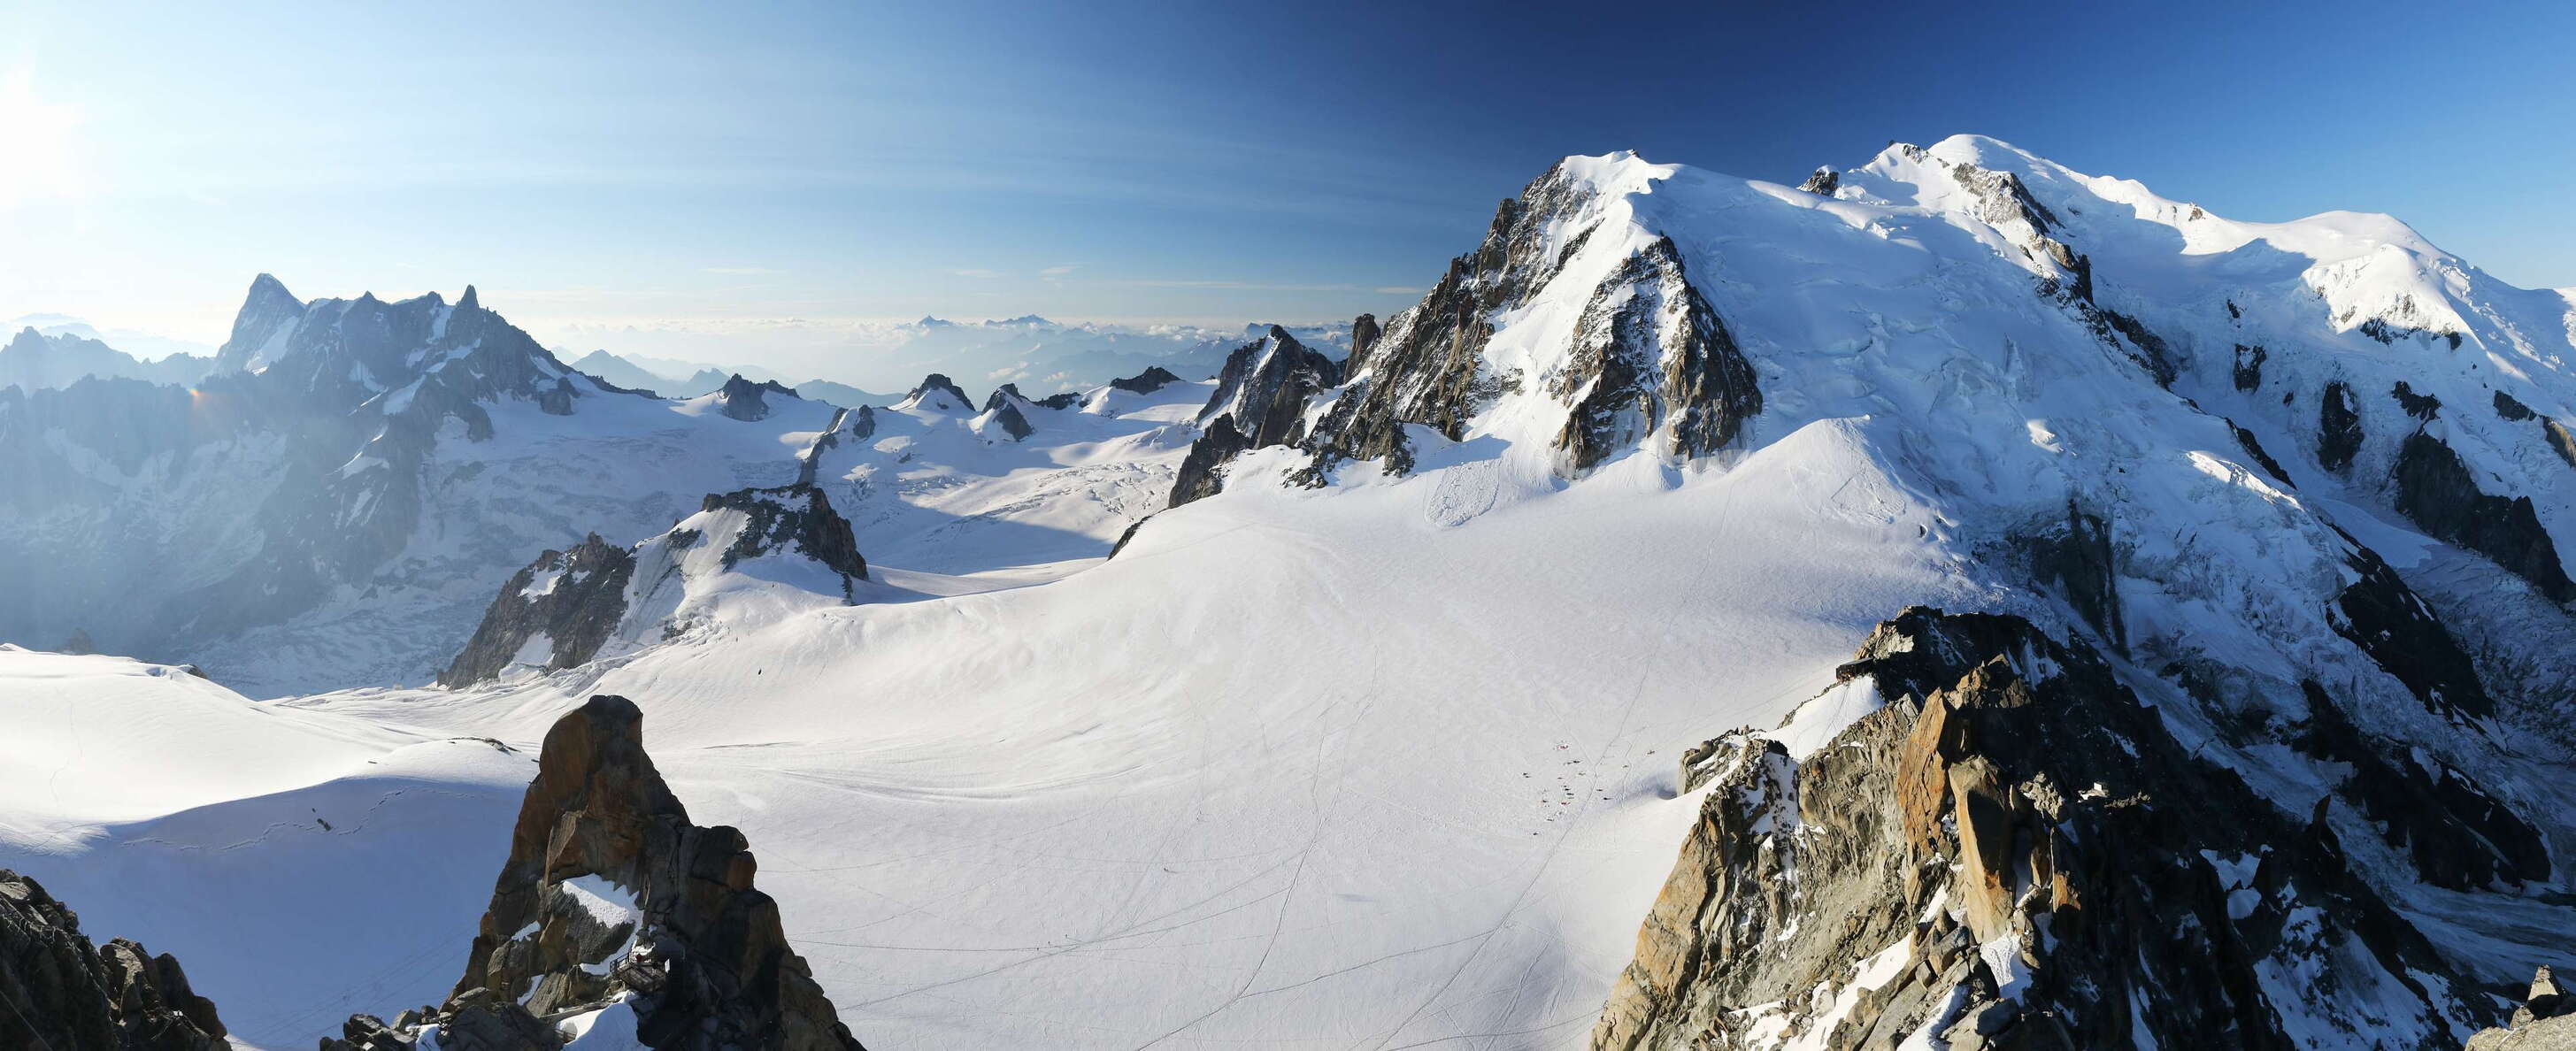 Grandes Jorasses and Mont Blanc | Panoramic view